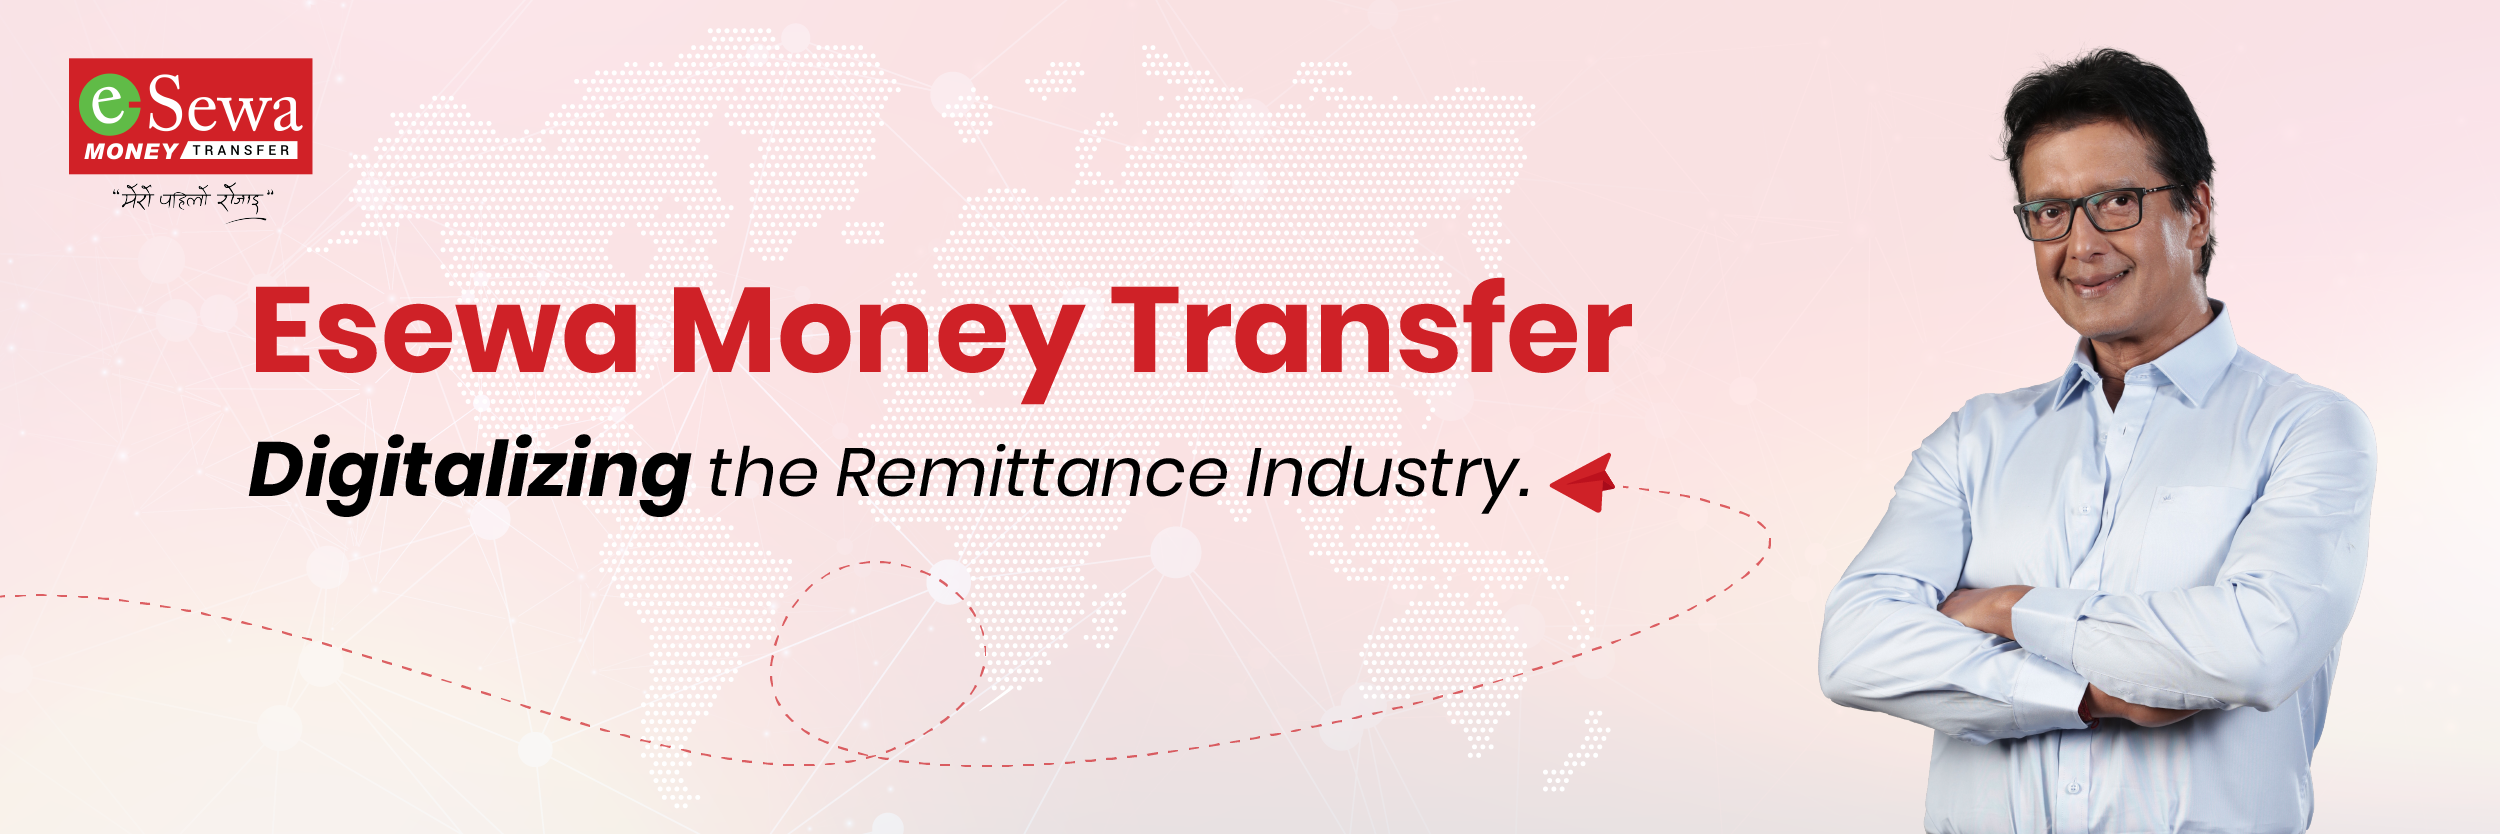 Esewa Money Transfer- Digitalizing the Remittance Industry - Banner Image